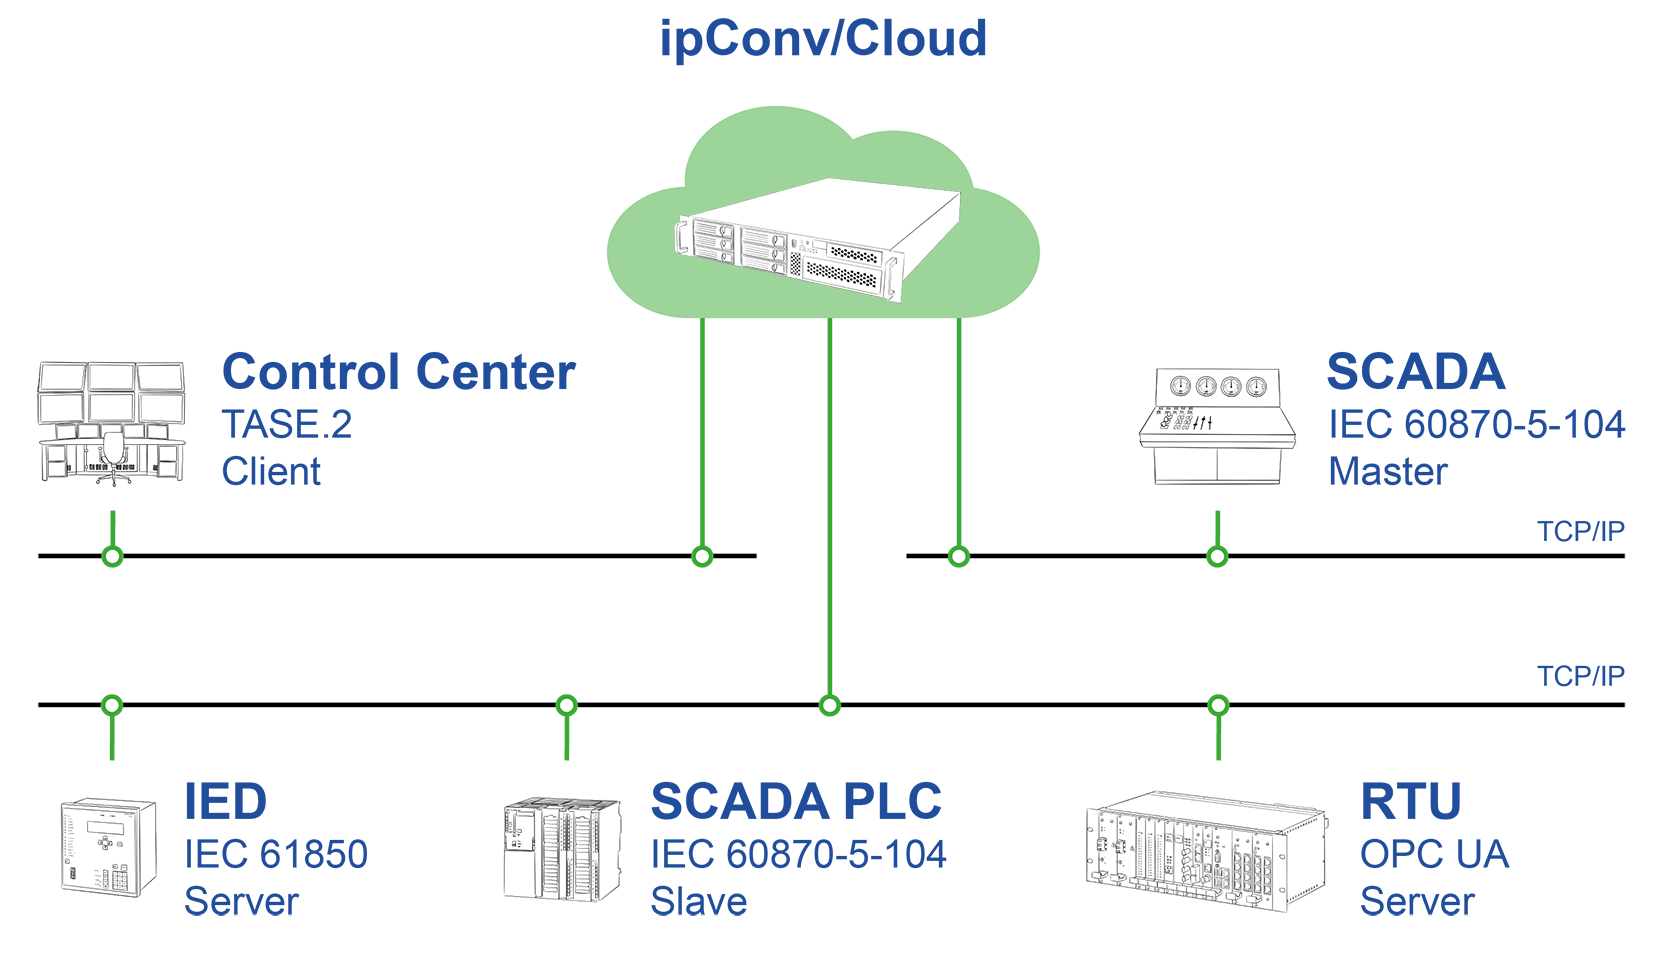 ipConv/Cloud in the cloud